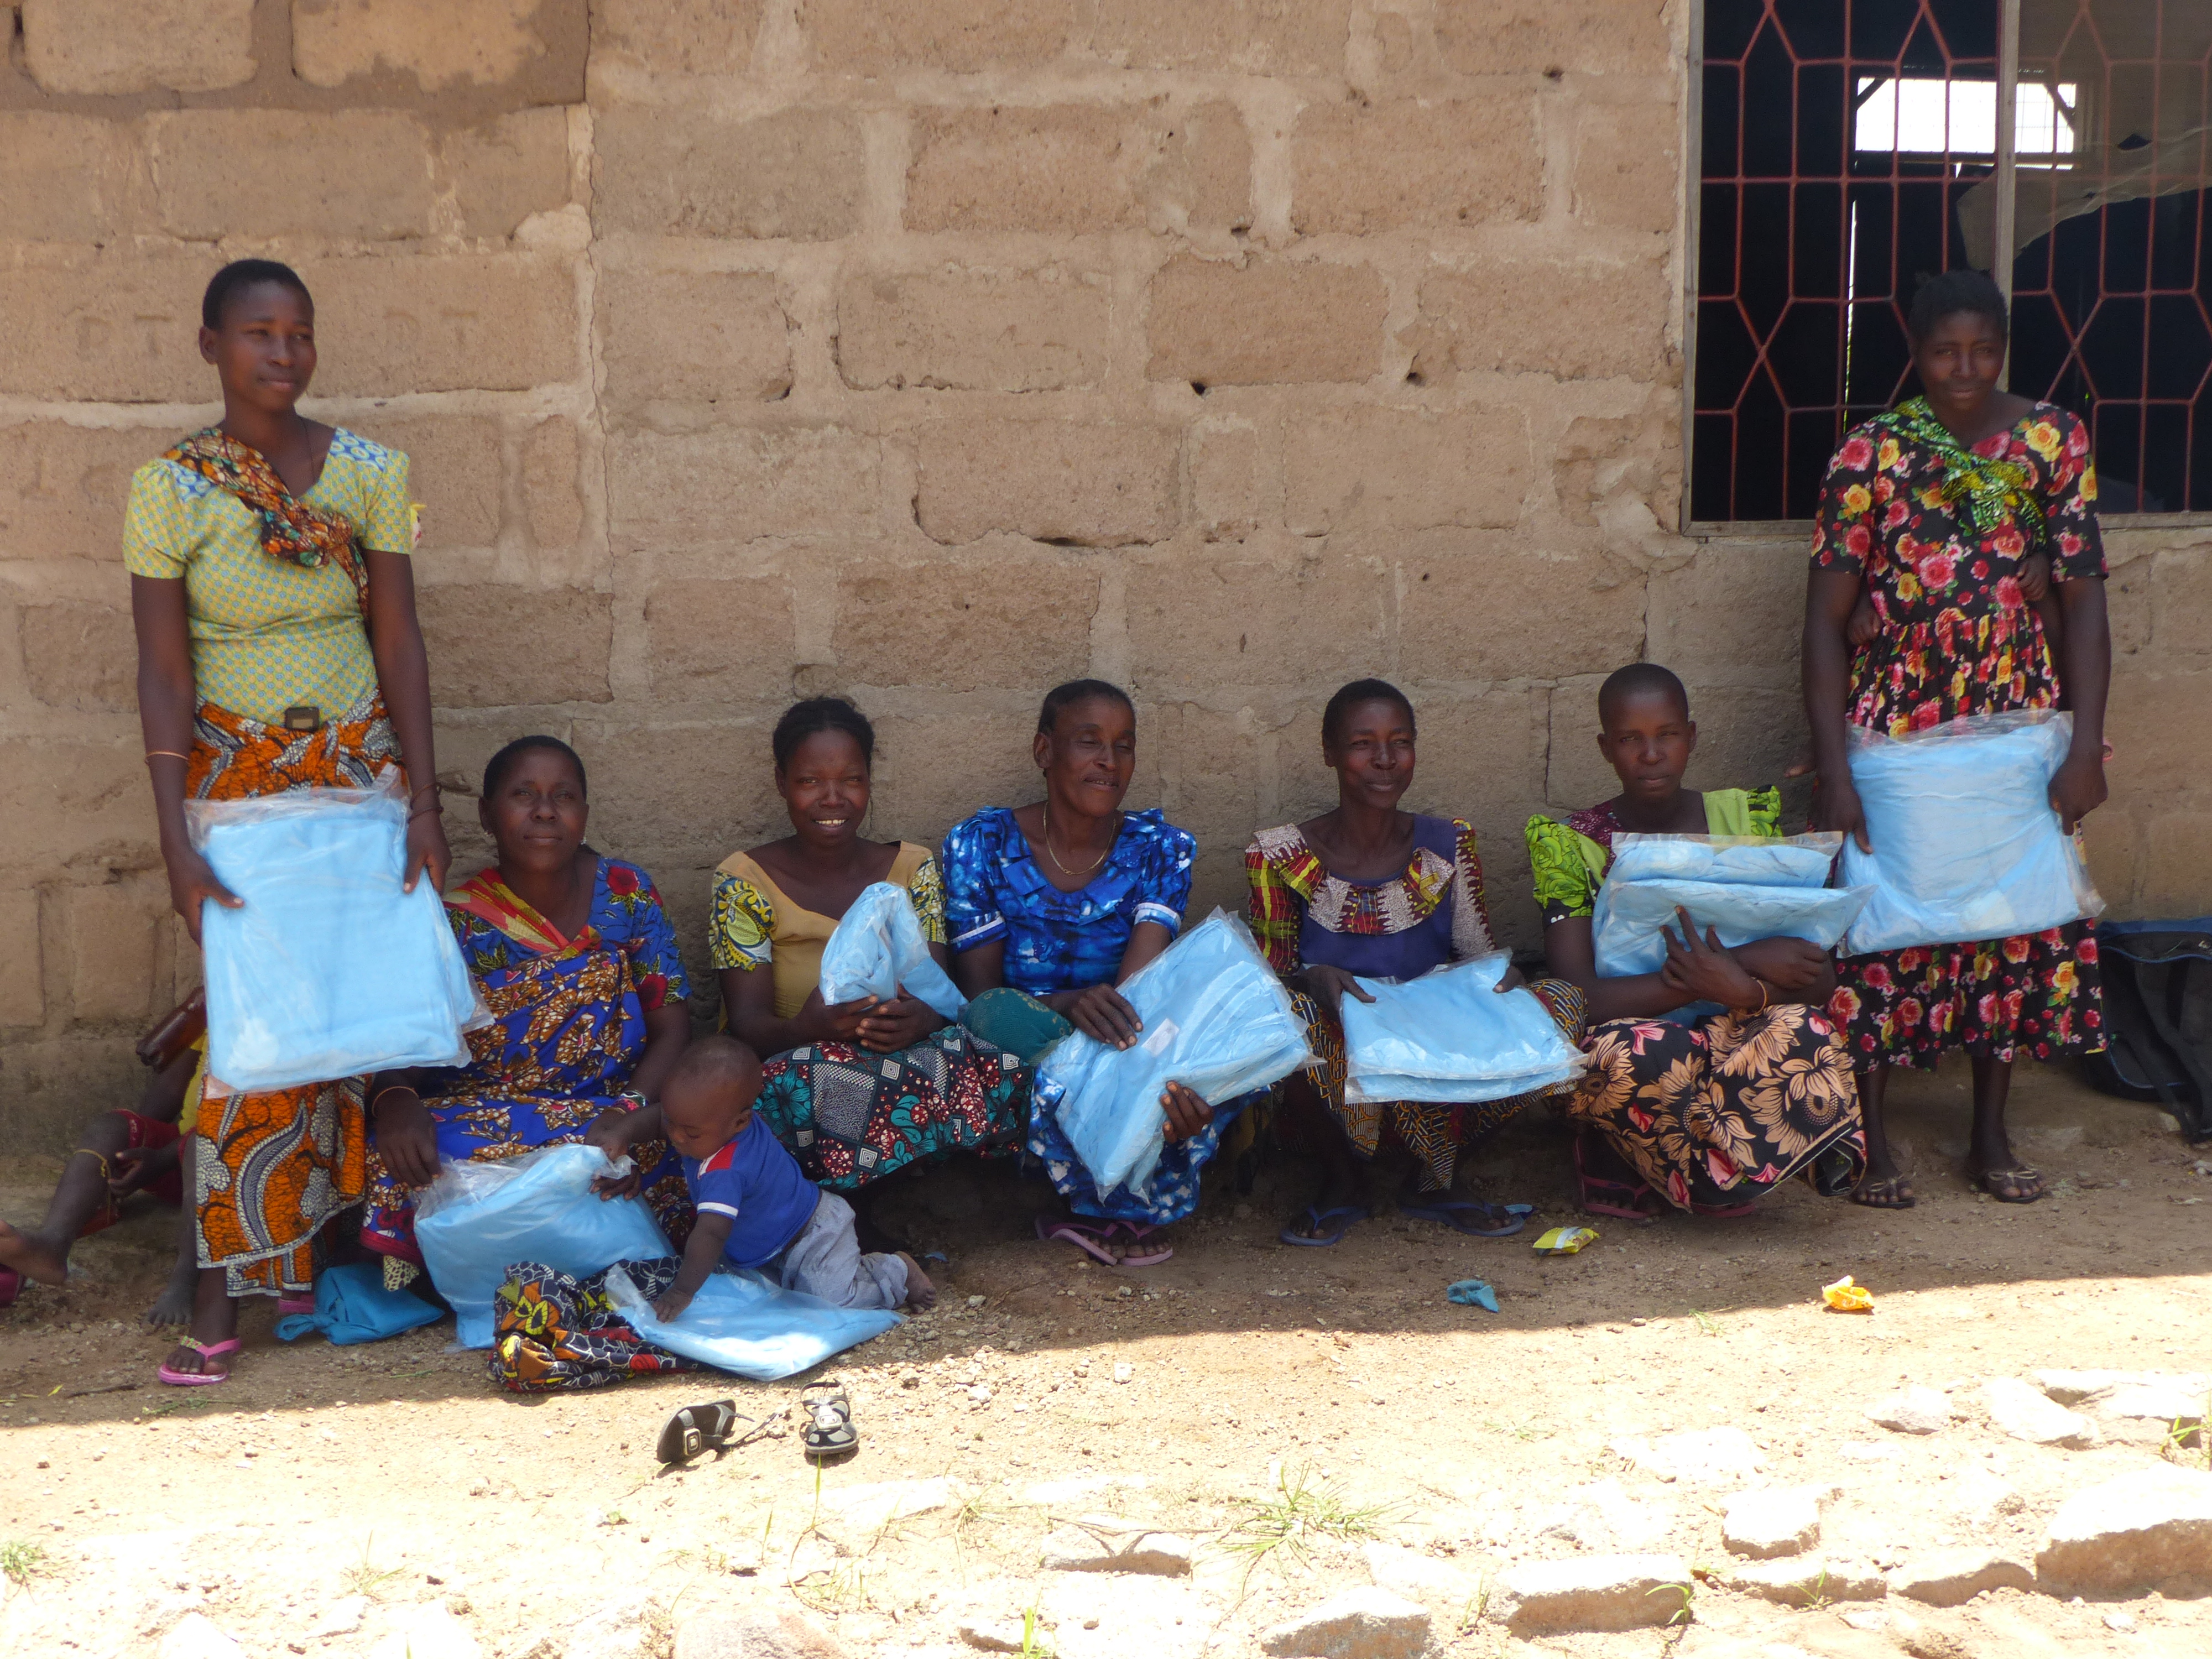 Women with mosquito nets, colorful Kanga. Busolwa, Misungwi, Tanzania. Credit: Natacha Protopopoff for LSHTM